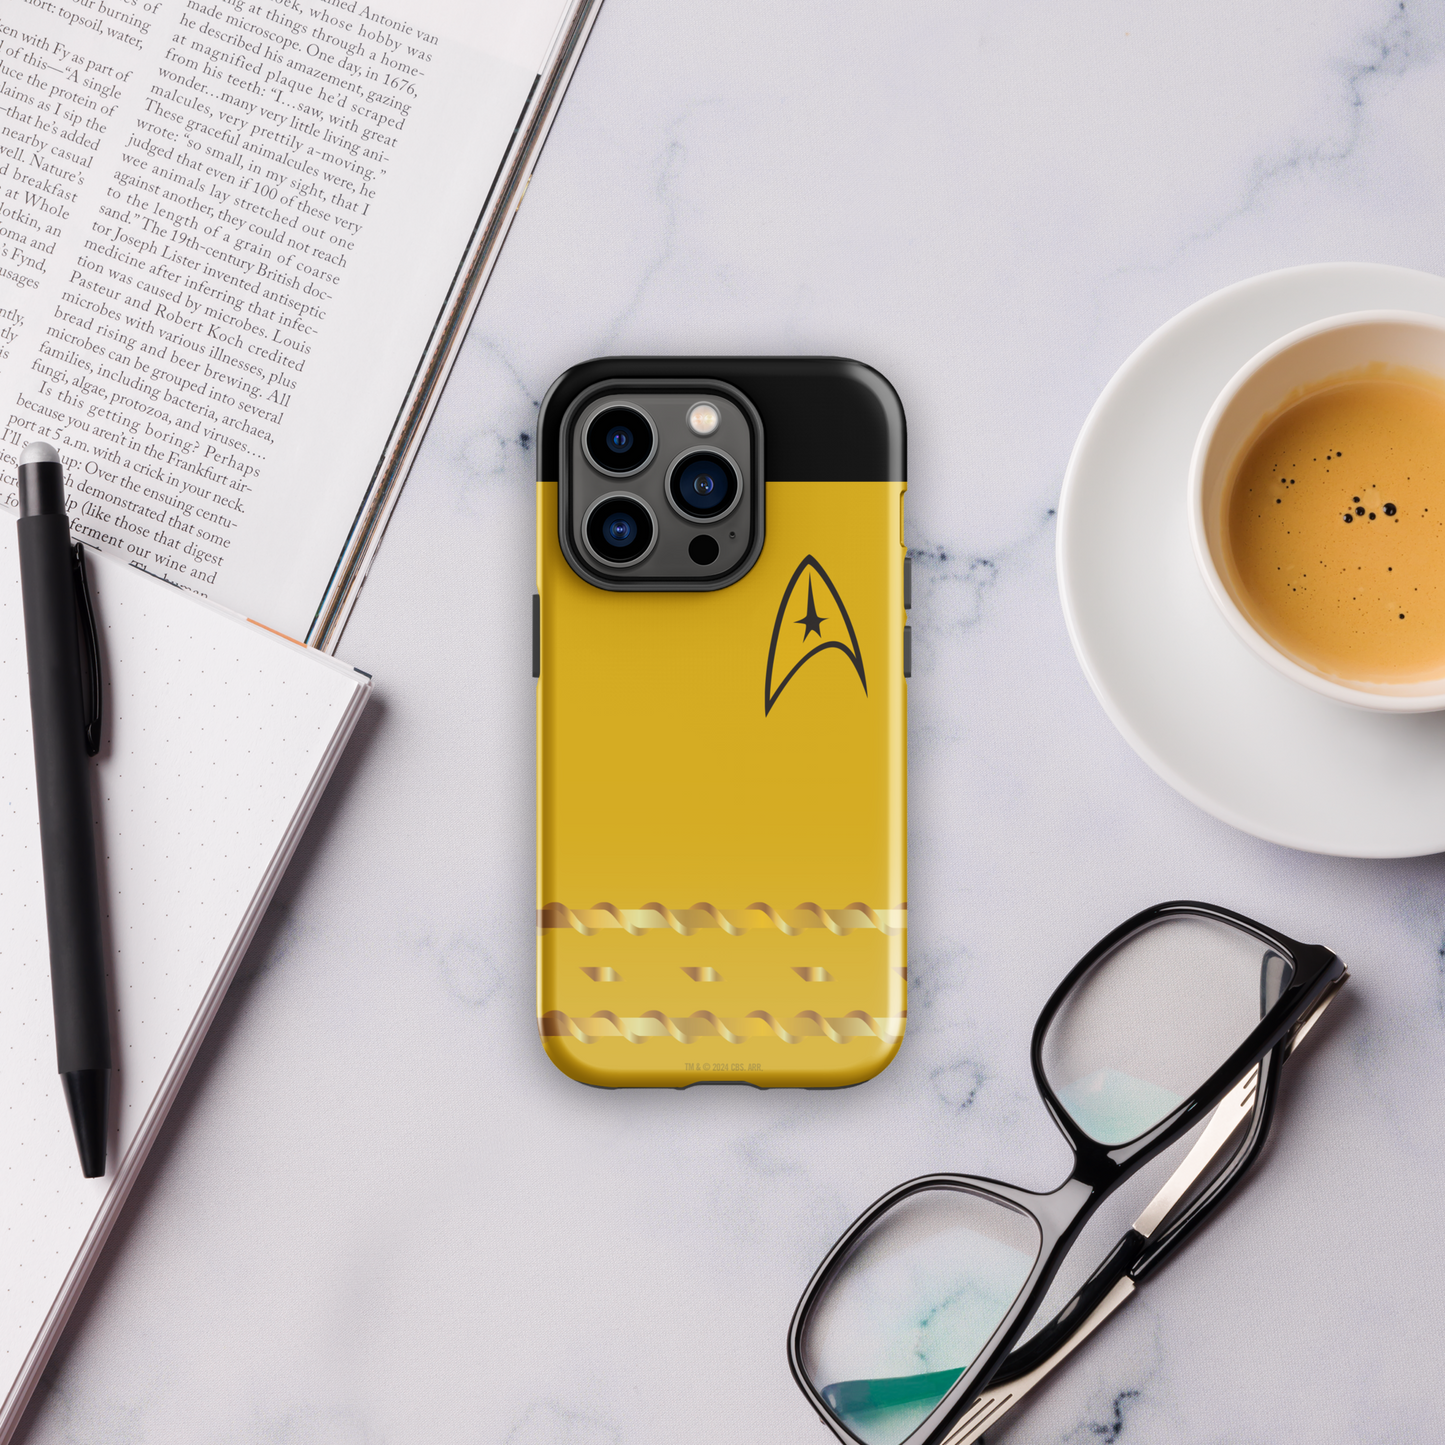 Star Trek Amarillo Starfleet Command Rank Tough Phone Case - iPhone